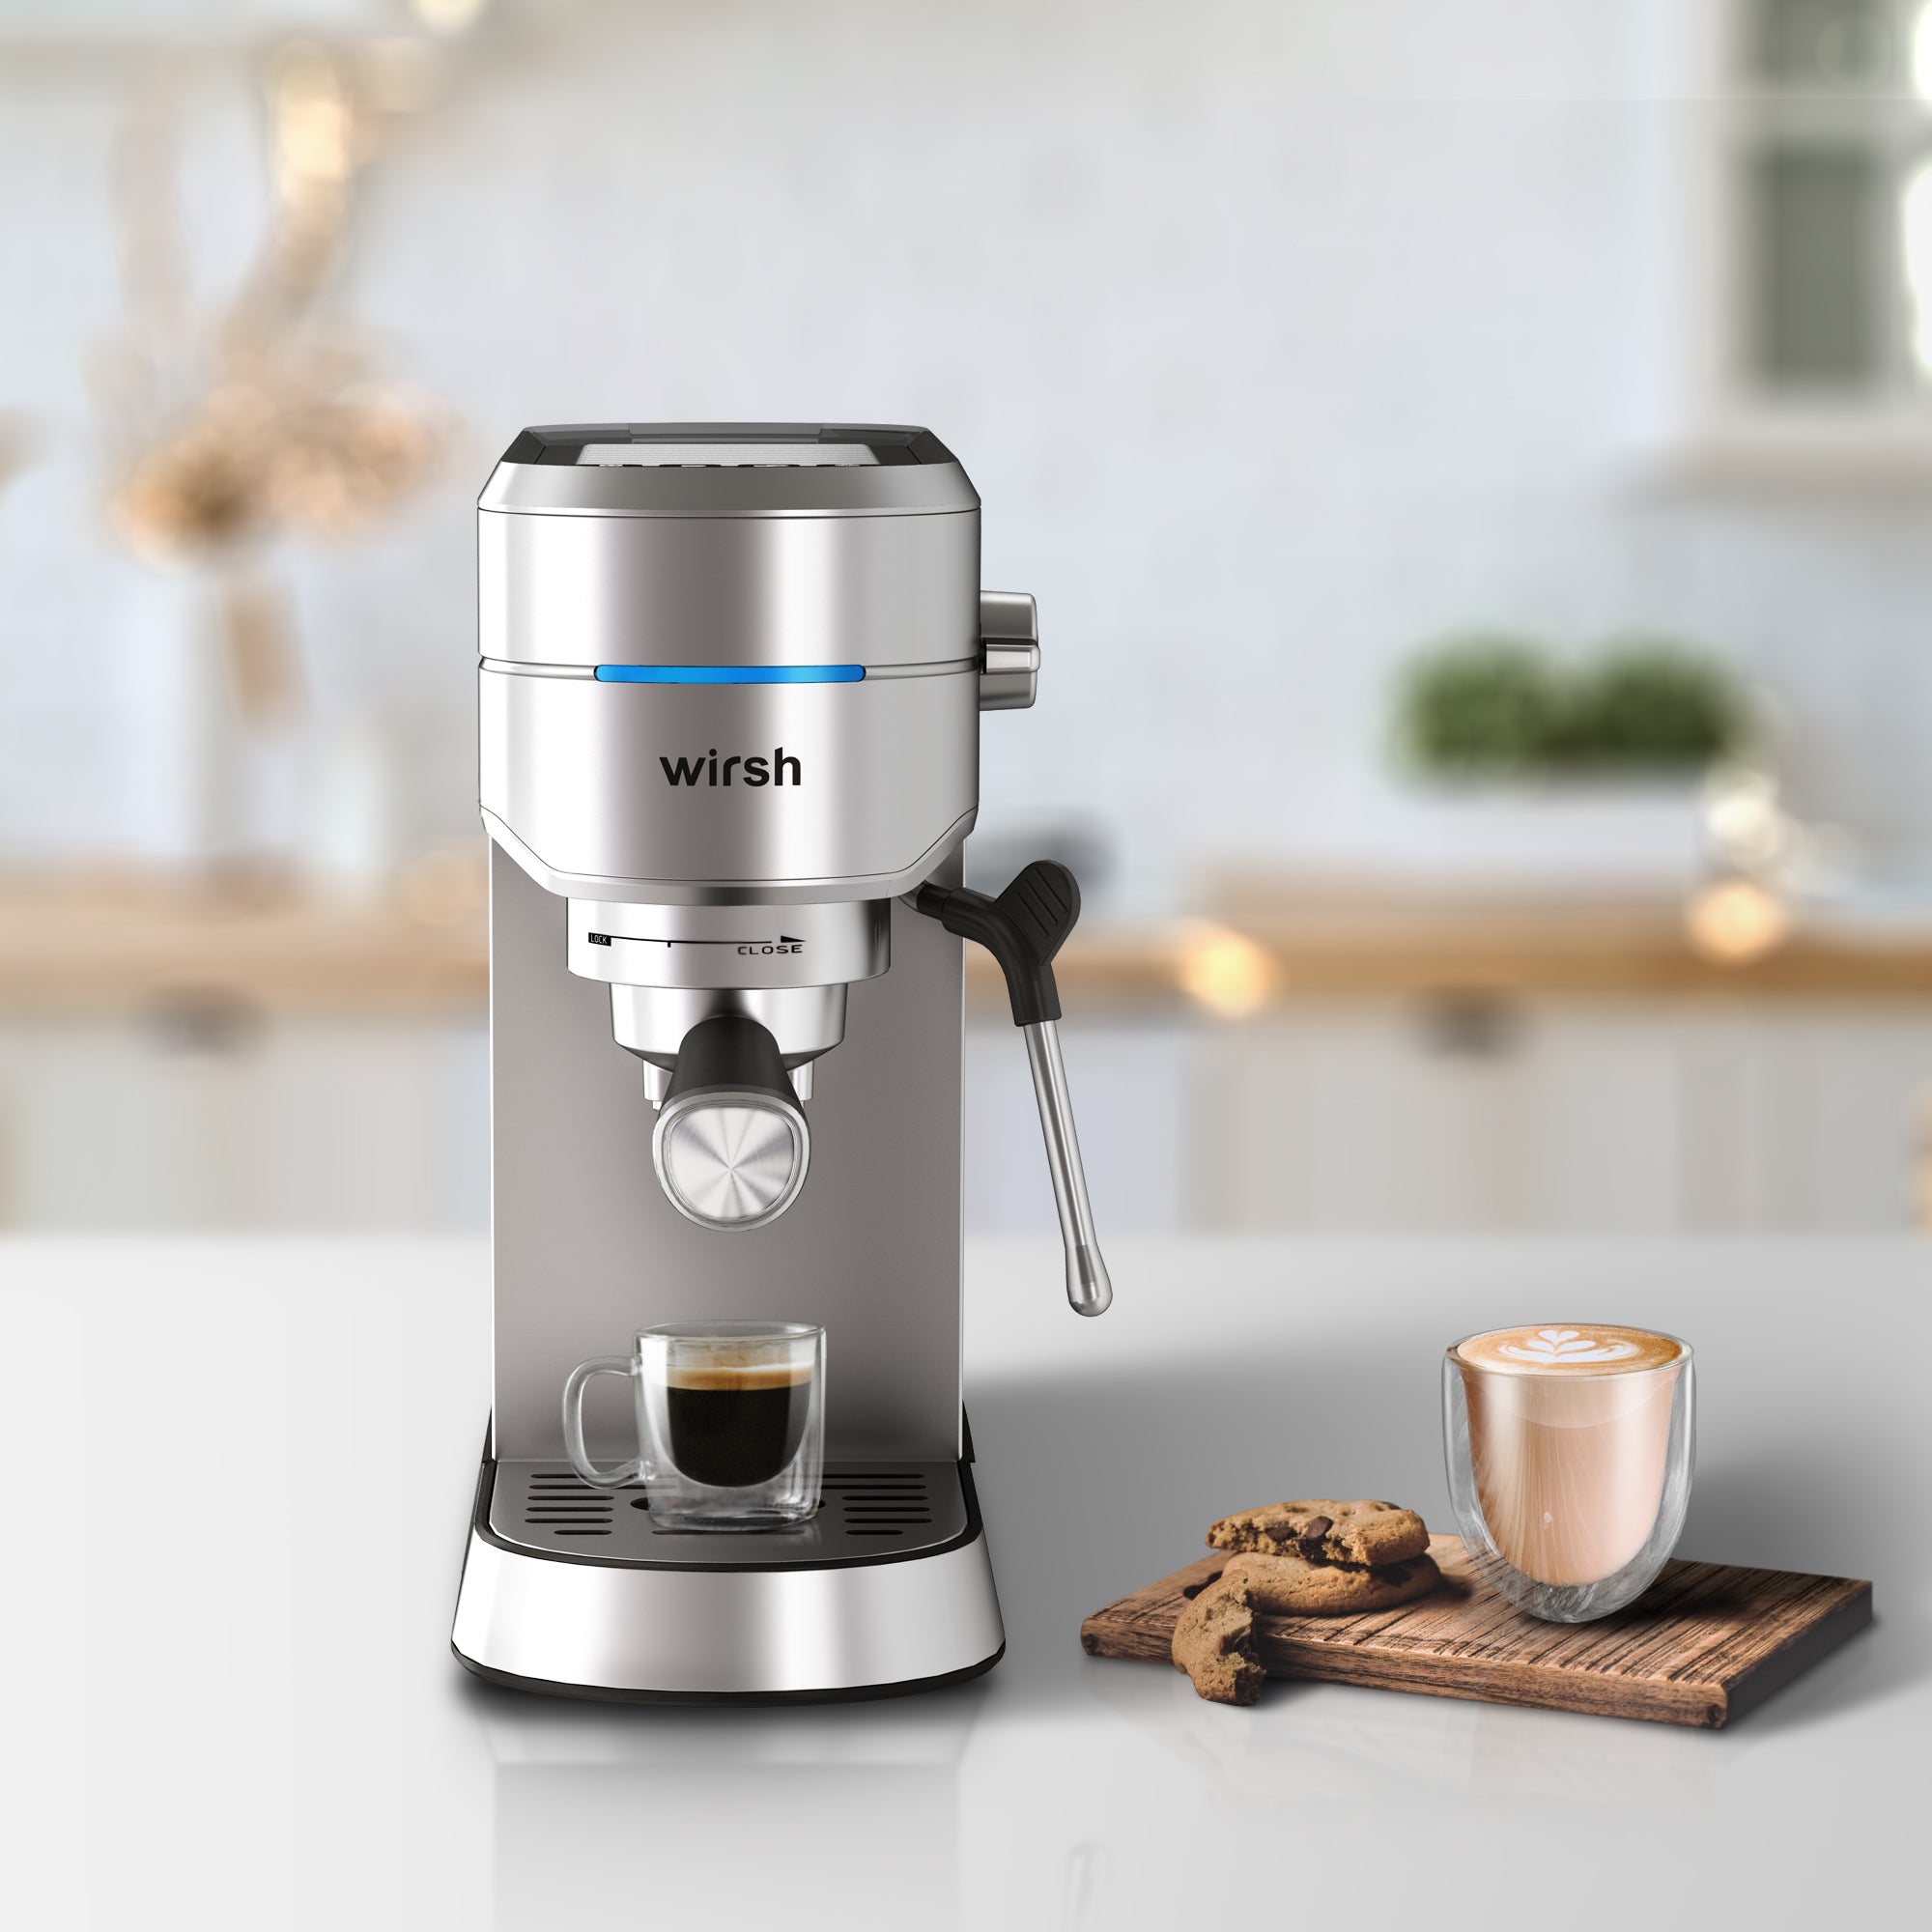 Achievement Unlocked! Wirsh announces the Wirsh 15 Bar Espresso Machine as the Best Espresso Machine for Small Spaces, According to InsideHook